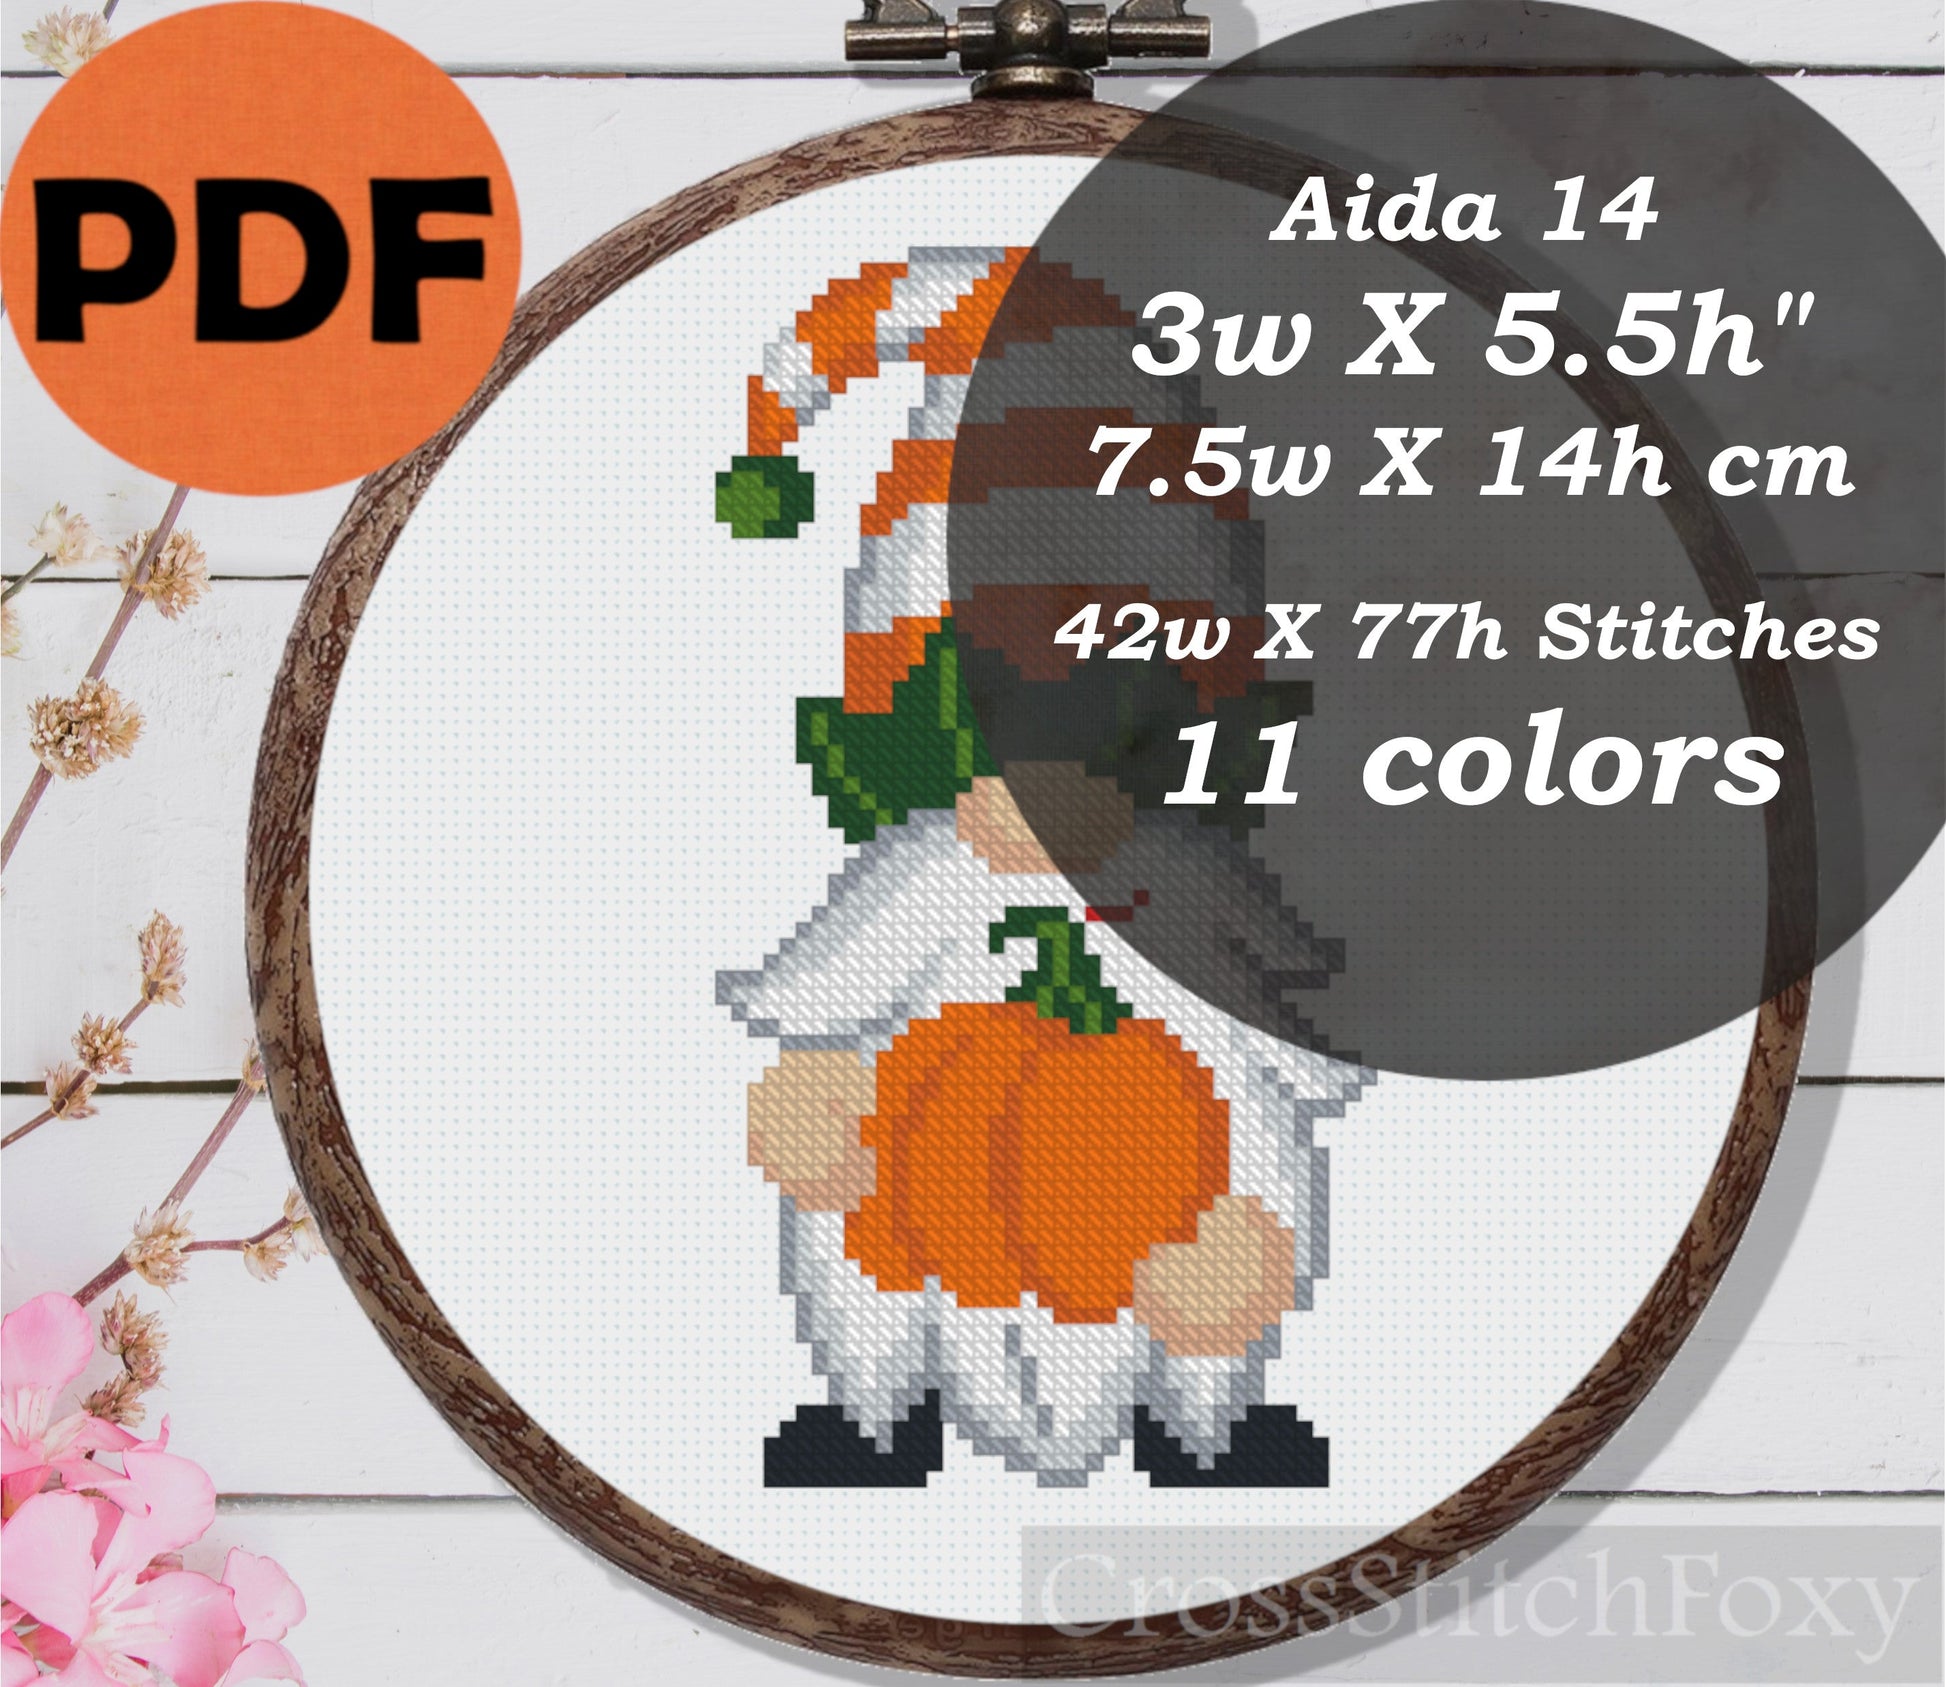 Fall gnome with pumpkin cross stitch pattern